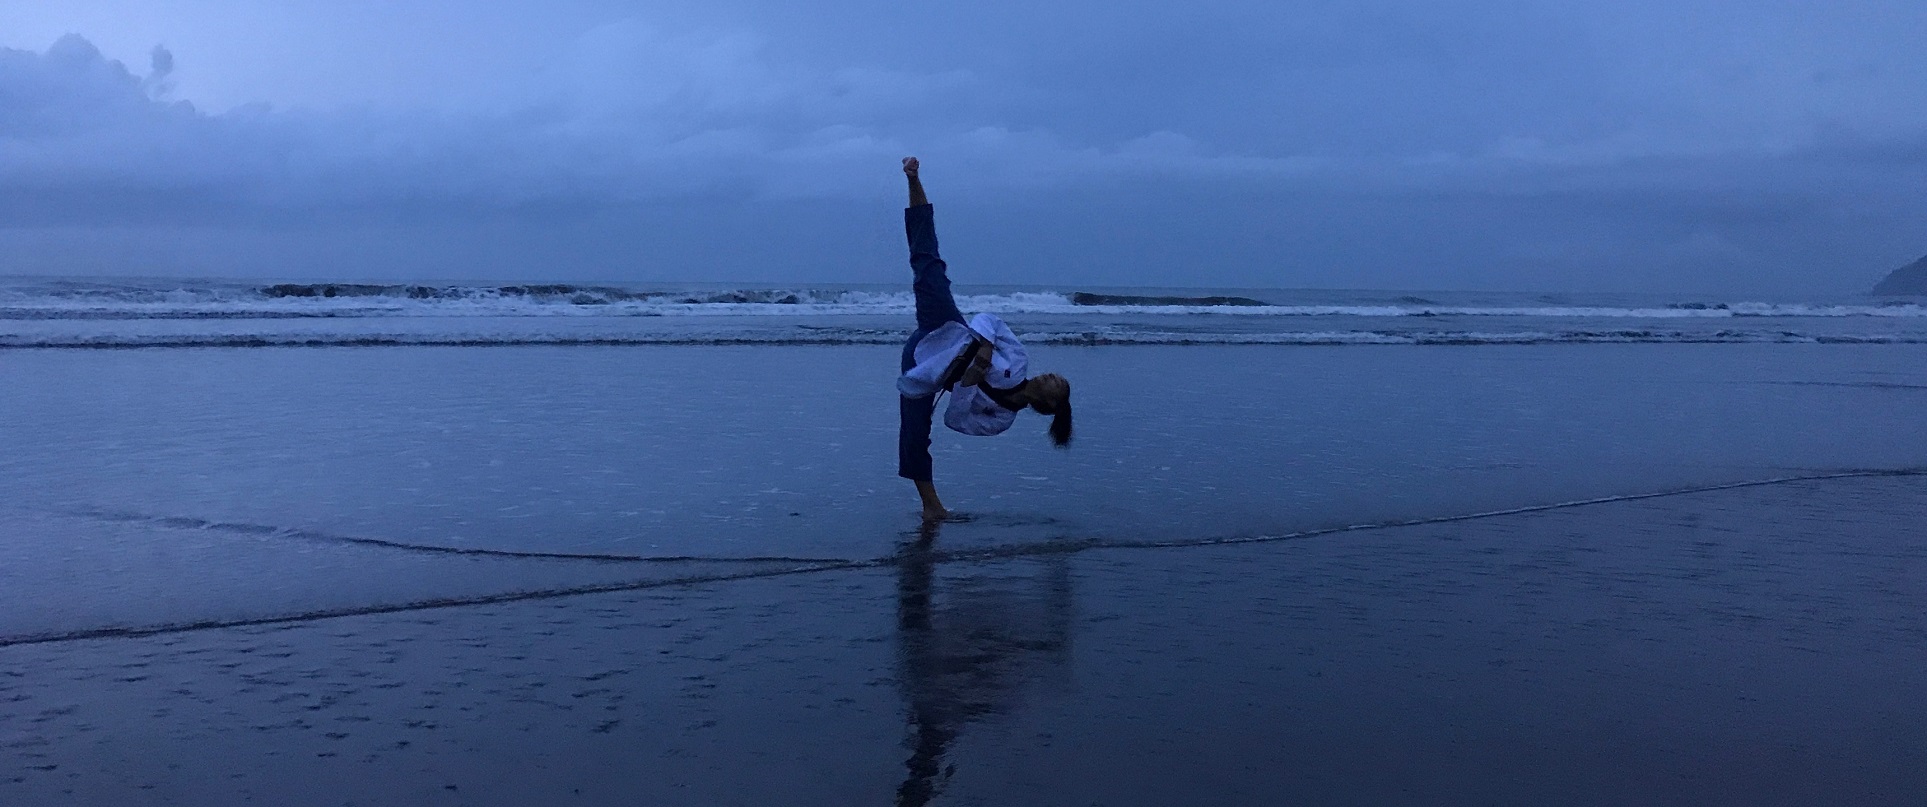 Shiba Taekwondo student kicking on the beach